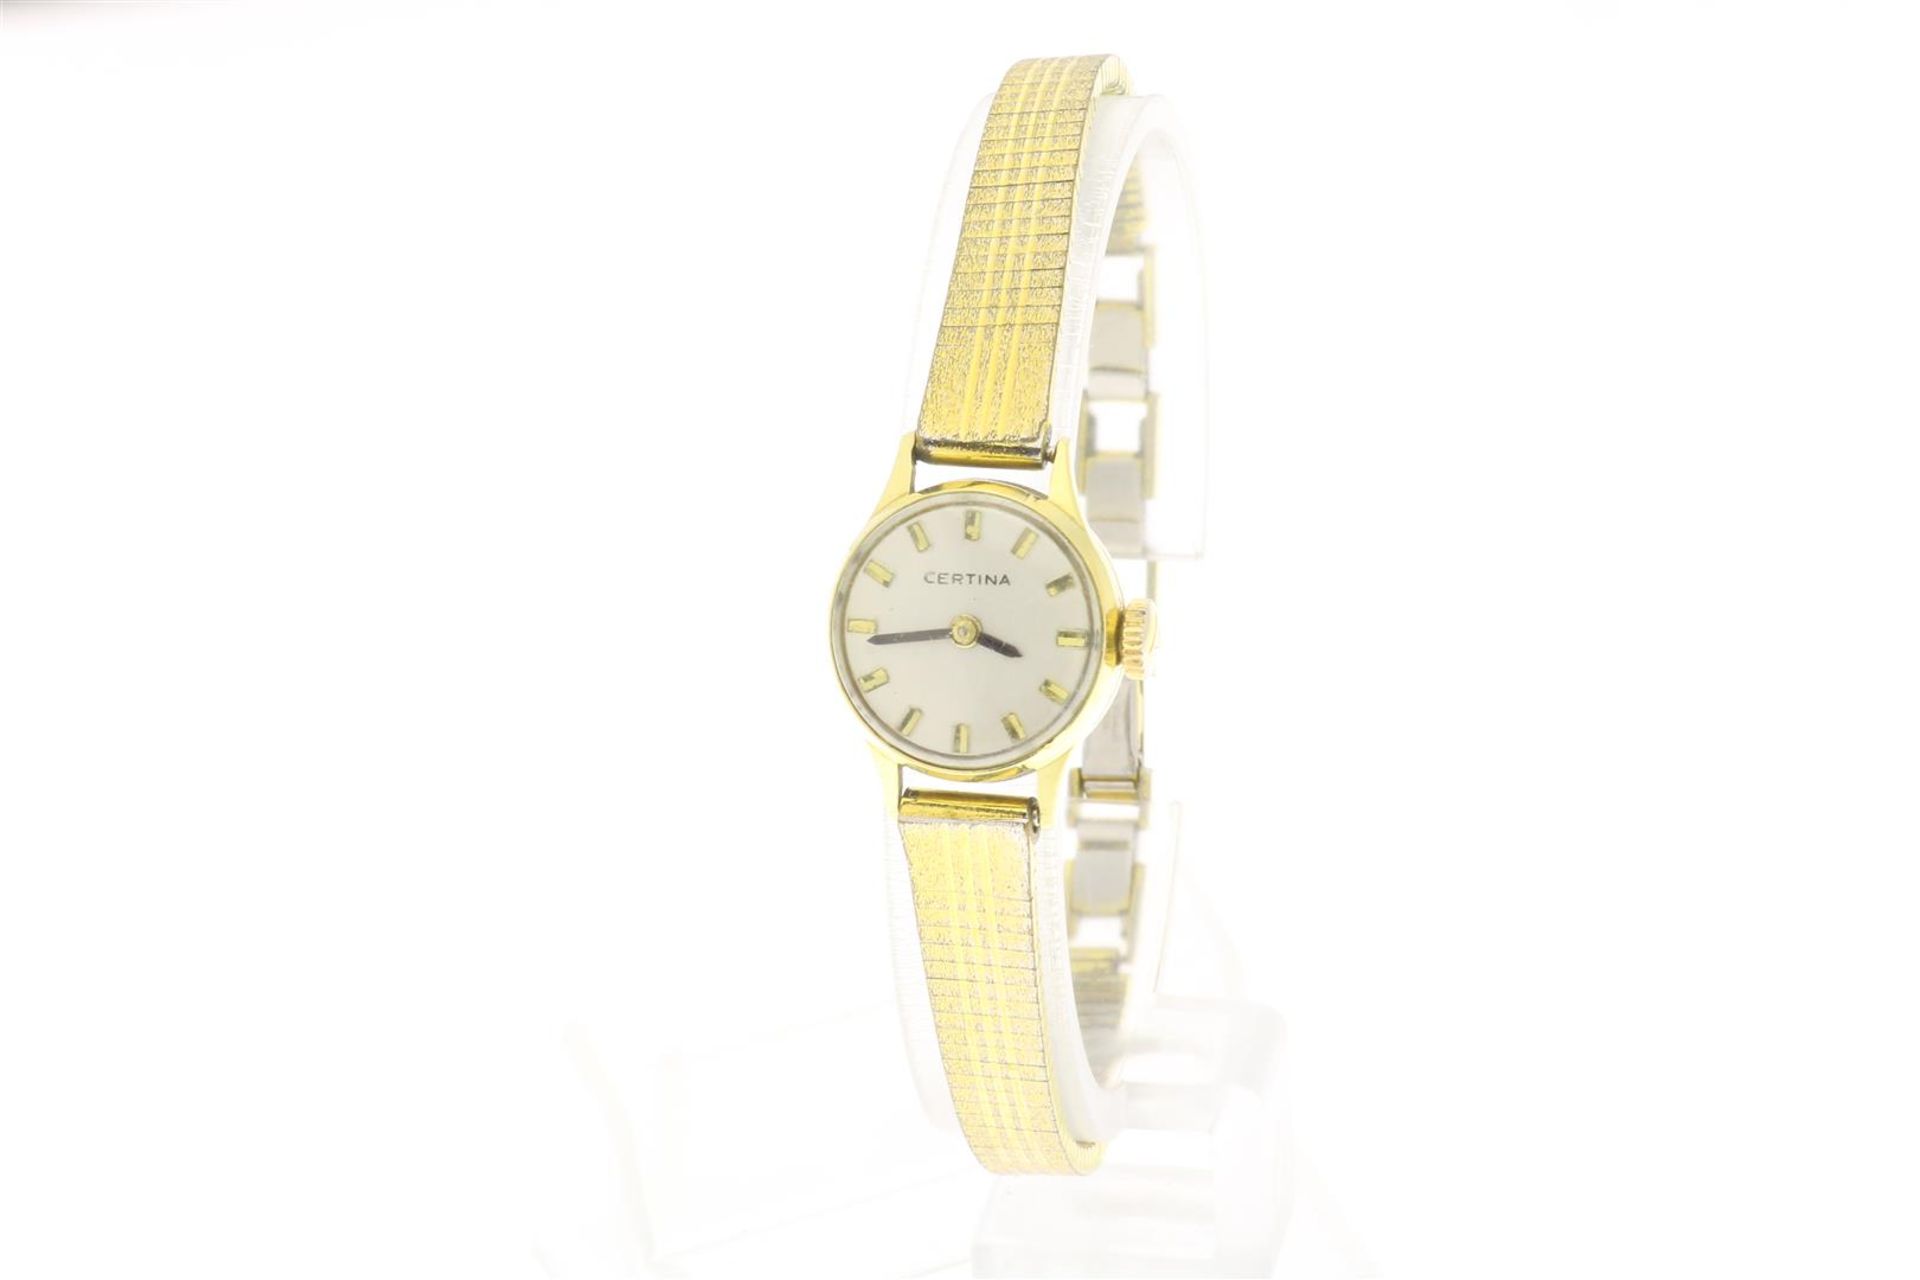 Certina yellow gold watch with flex bracelet 